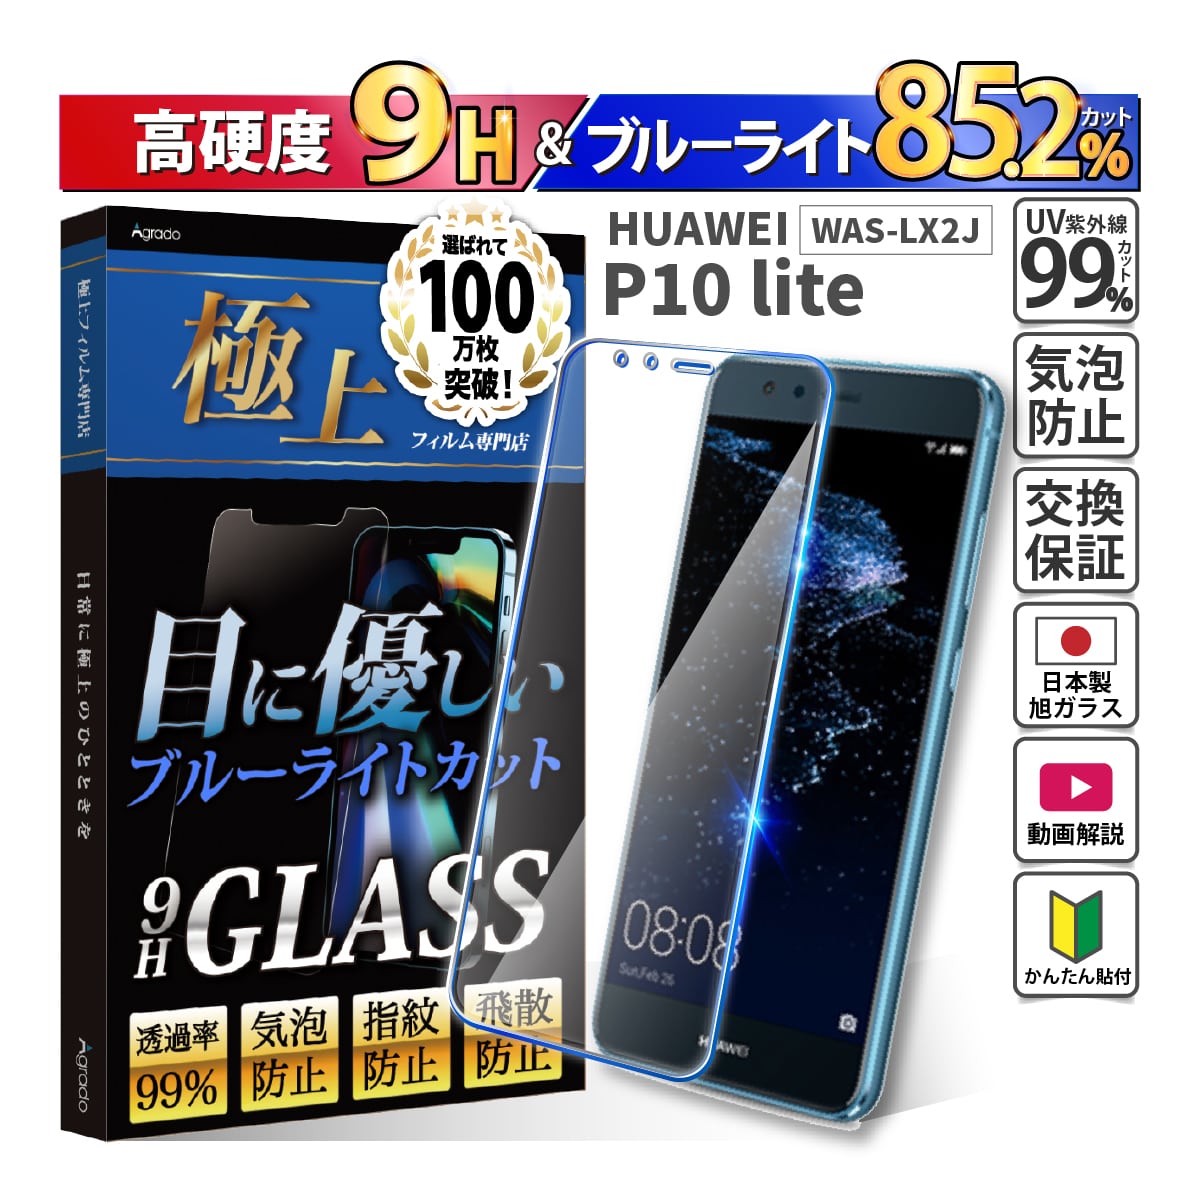 HUAWEI P10 Lite フィルム WAS-LX2J ブルーライトフィルム 強化ガラス ブルーライトカット P10 Lite ガラスフィルム 日本製旭硝子 ケース 干渉しない 1年保証